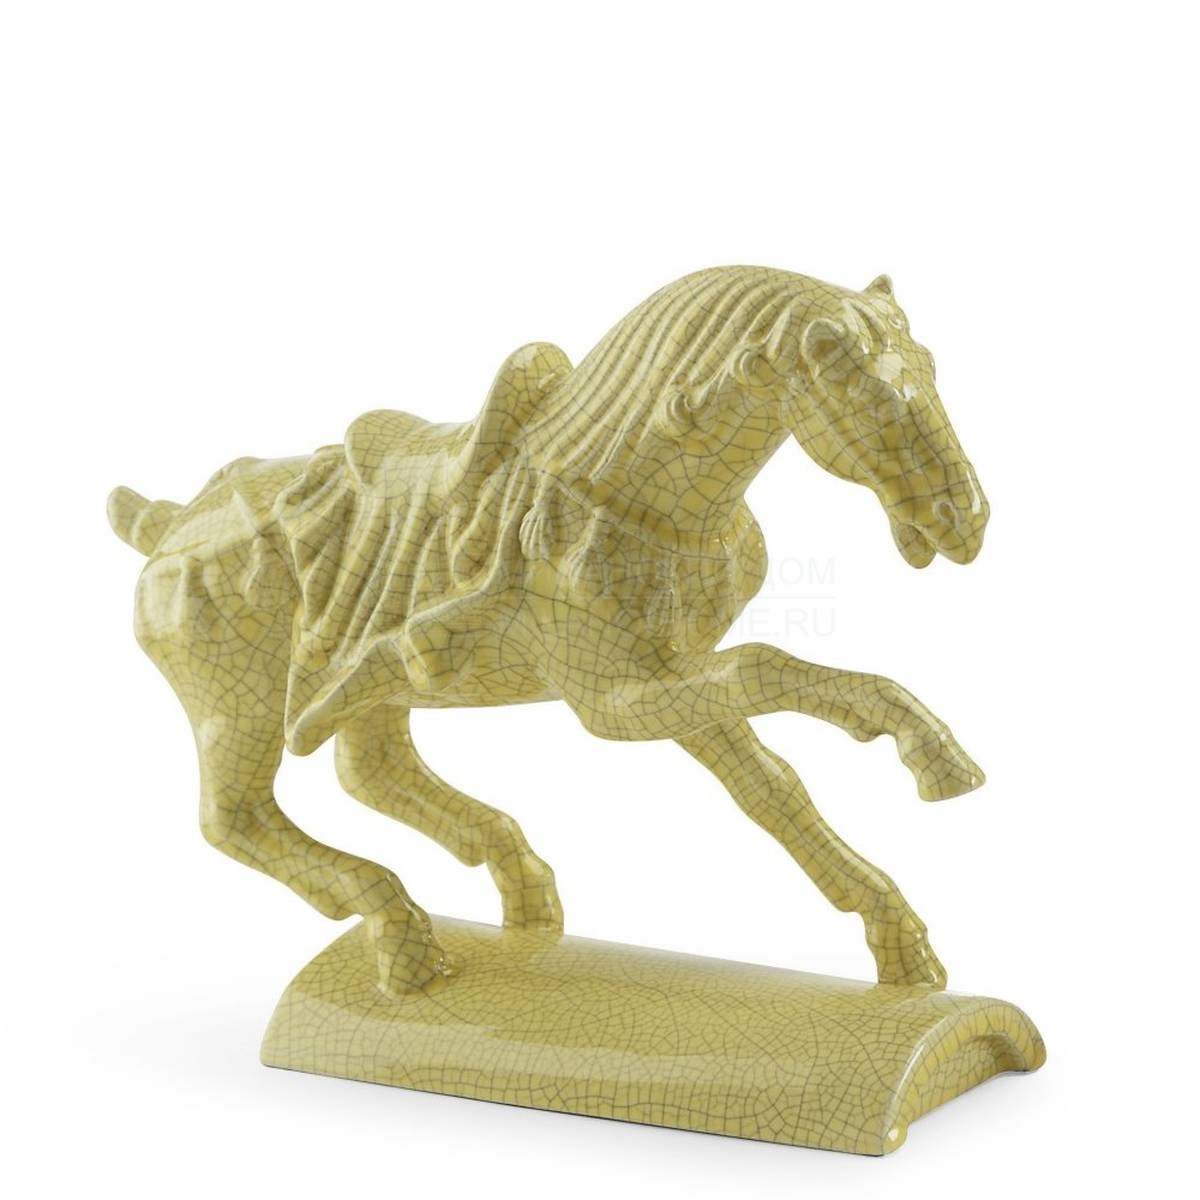 Статуэтка T'Ang horse on tile из Италии фабрики MARIONI